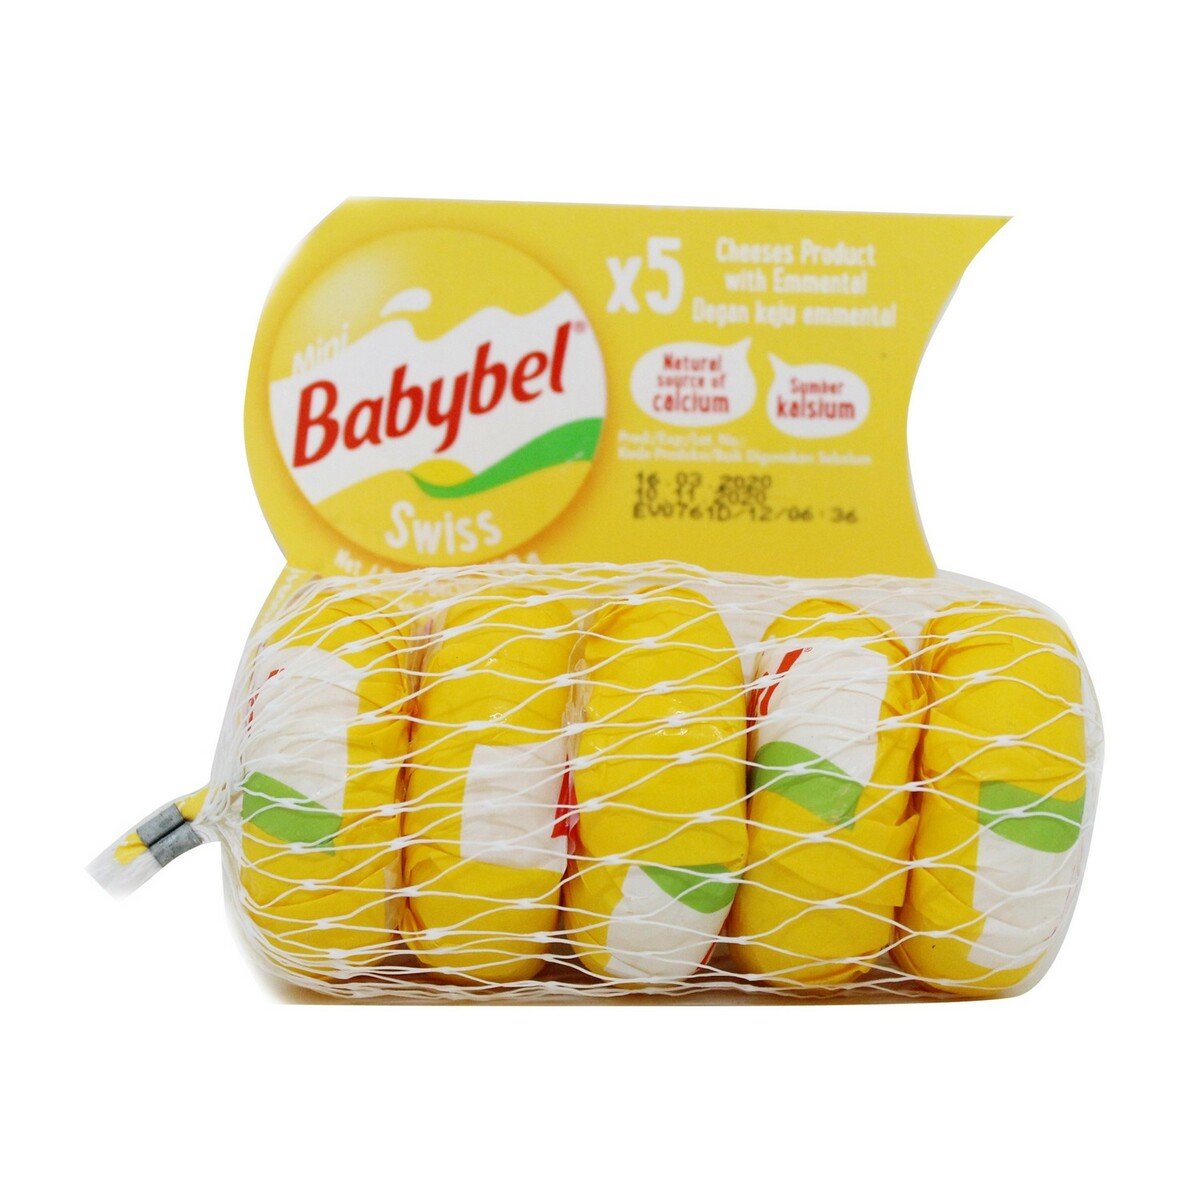 Bel Mini Babybel Swiss 100g